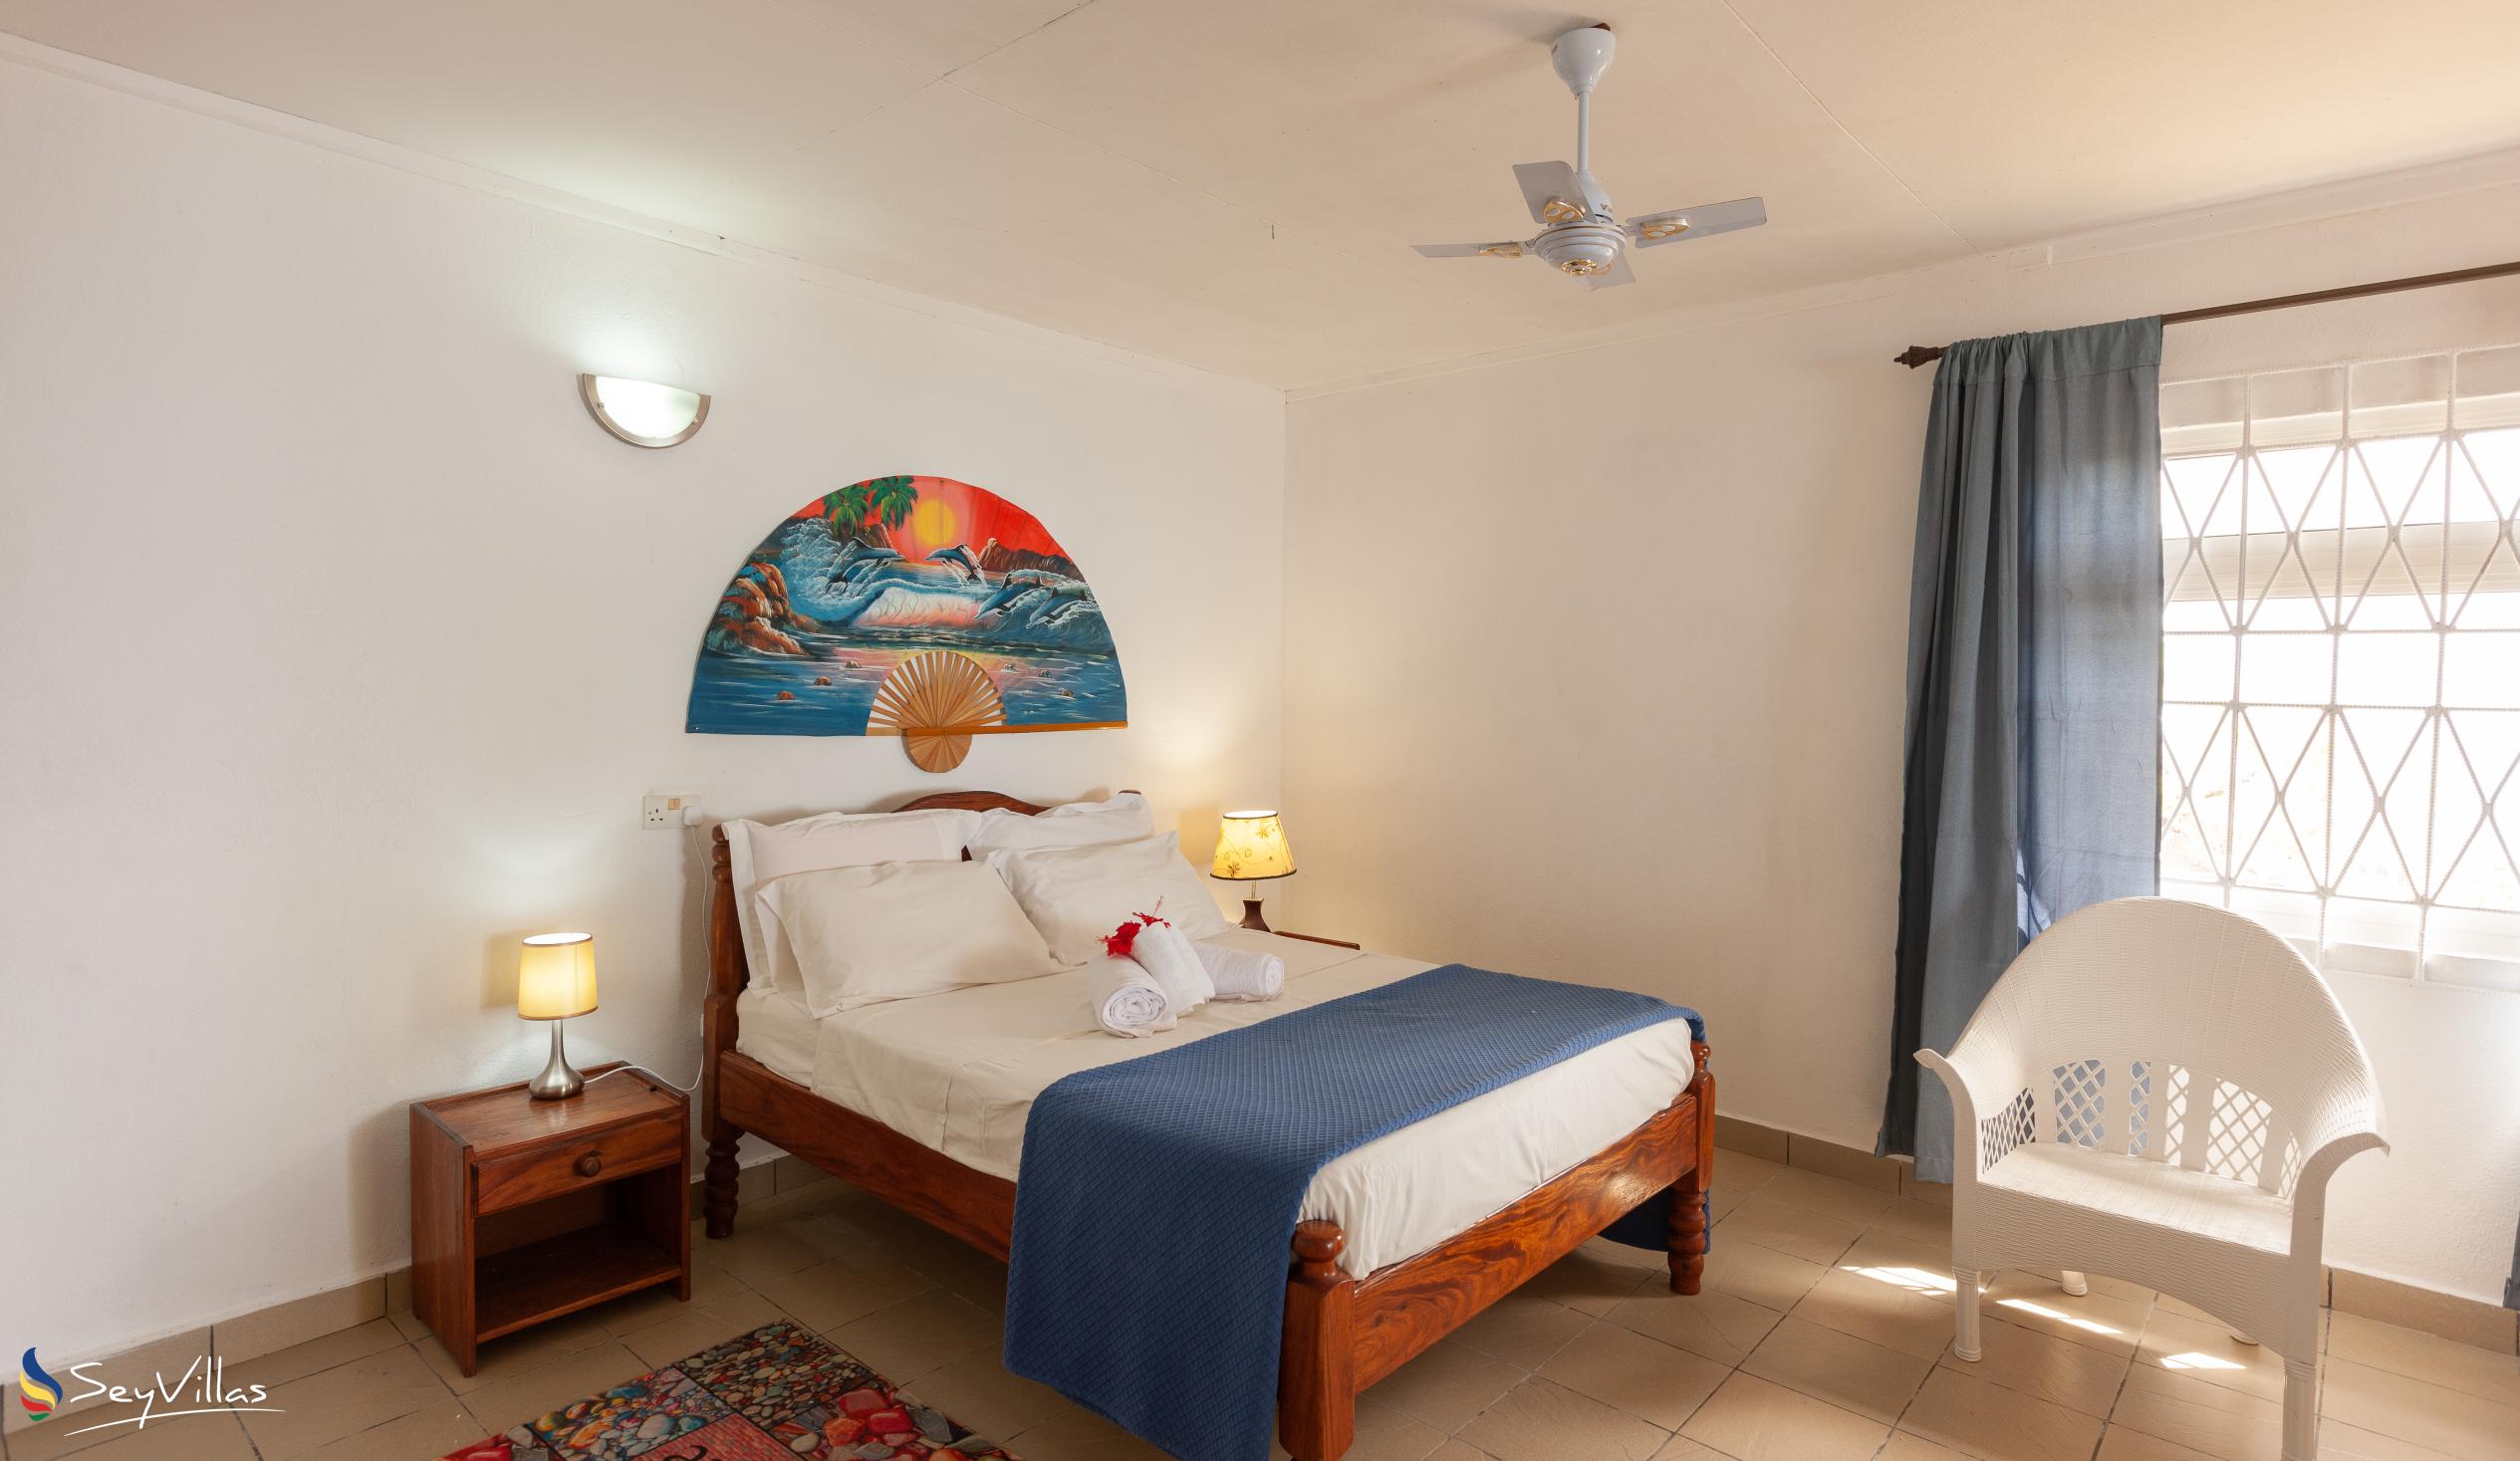 Foto 39: Maison du Soleil - Villa 2 chambres - Praslin (Seychelles)